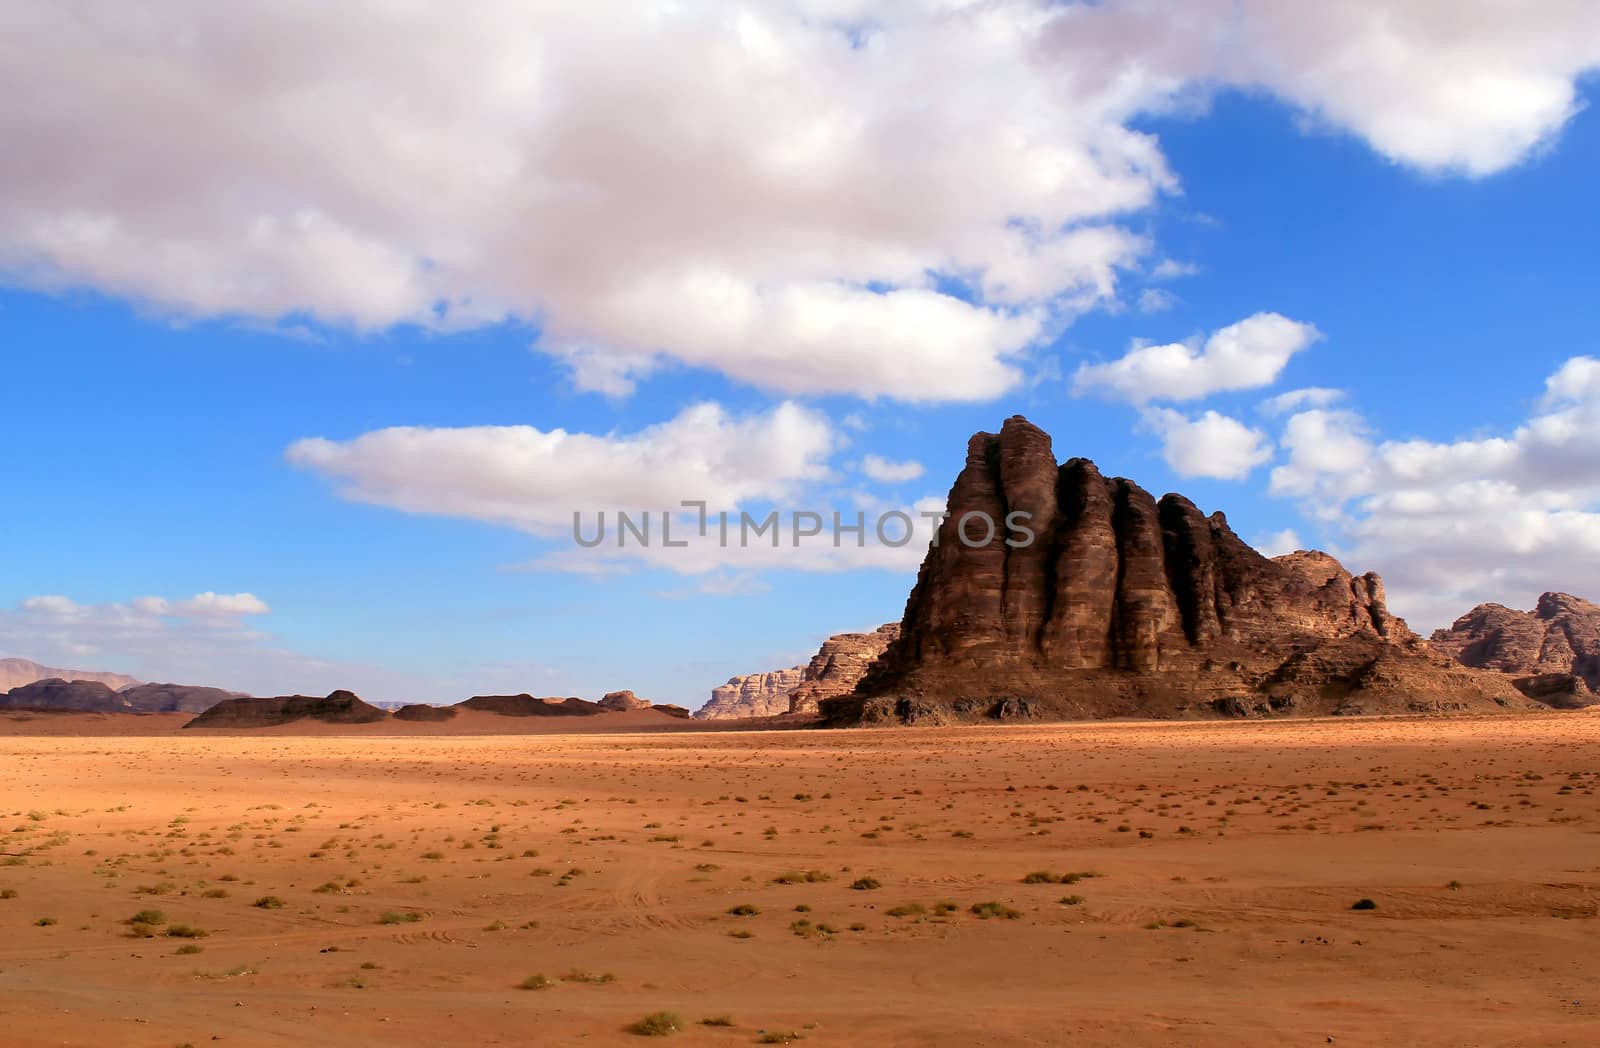 The "Seven Pillars of Wisdom" rock formation, Wadi Rum Desert beautiful landscape. Jordan.